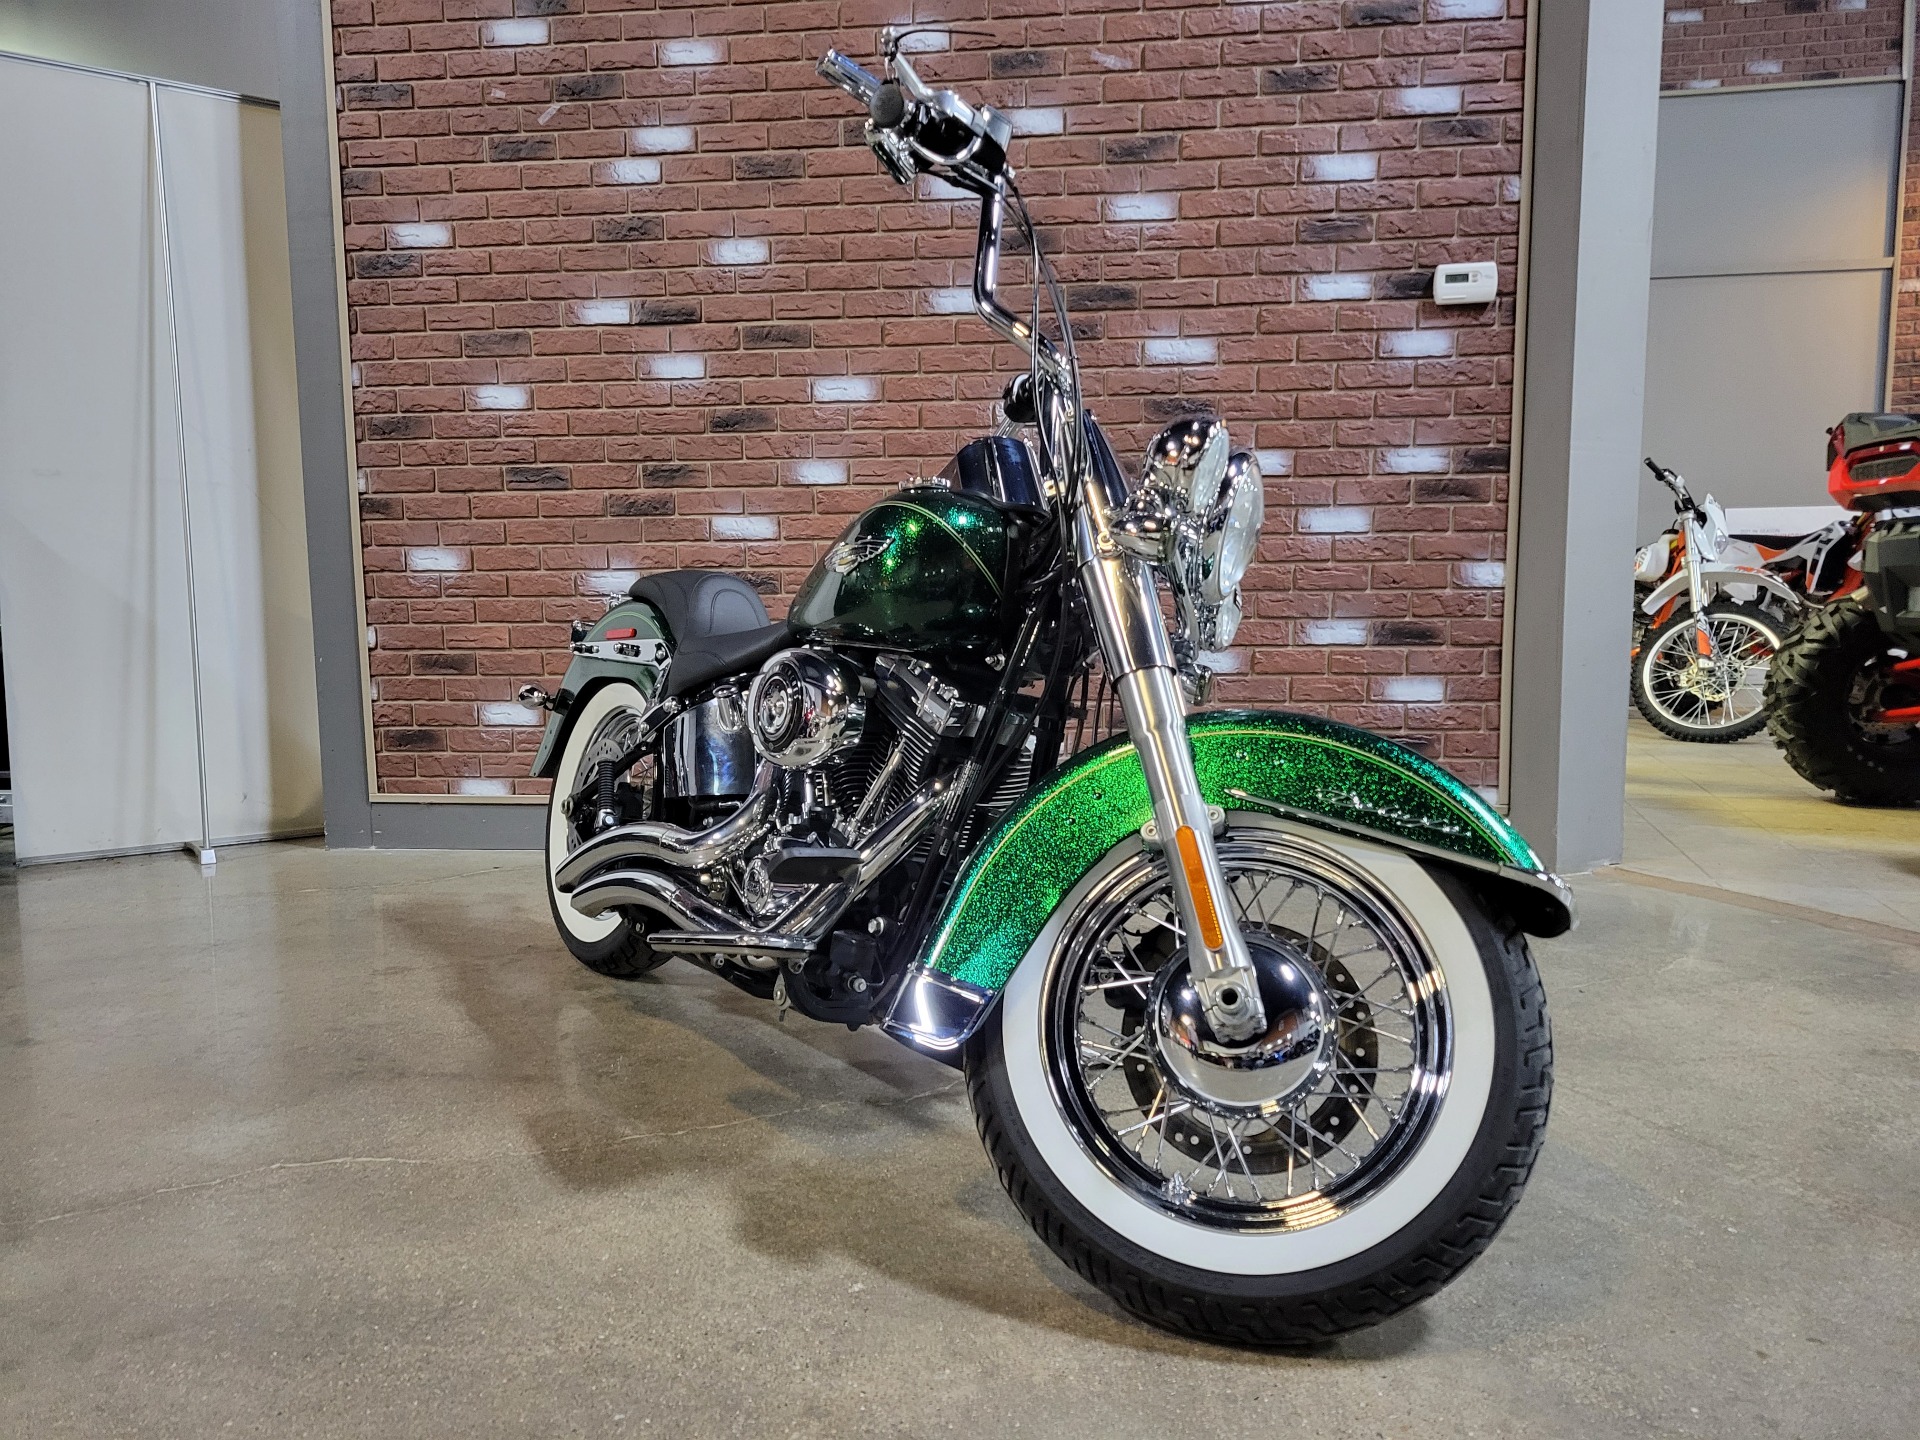 2013 Harley-Davidson Softail® Deluxe in Dimondale, Michigan - Photo 2